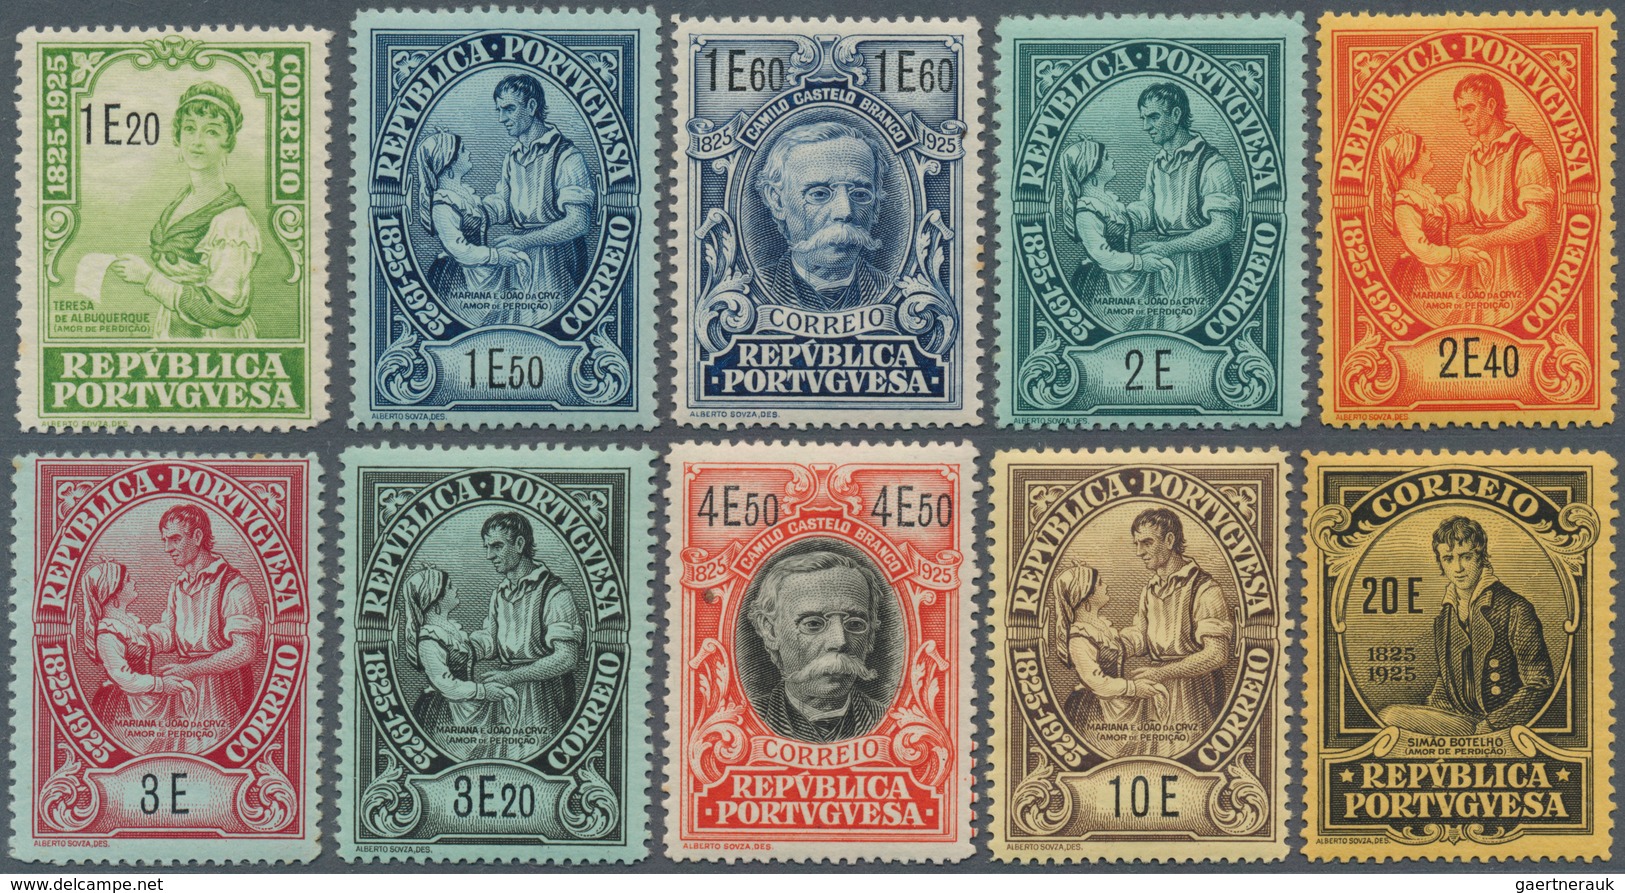 15887 Portugal: 1925, 2 C to 20 E "100 Birthday Camilo Castelo Branco" set of 30 values all mint NH, few (